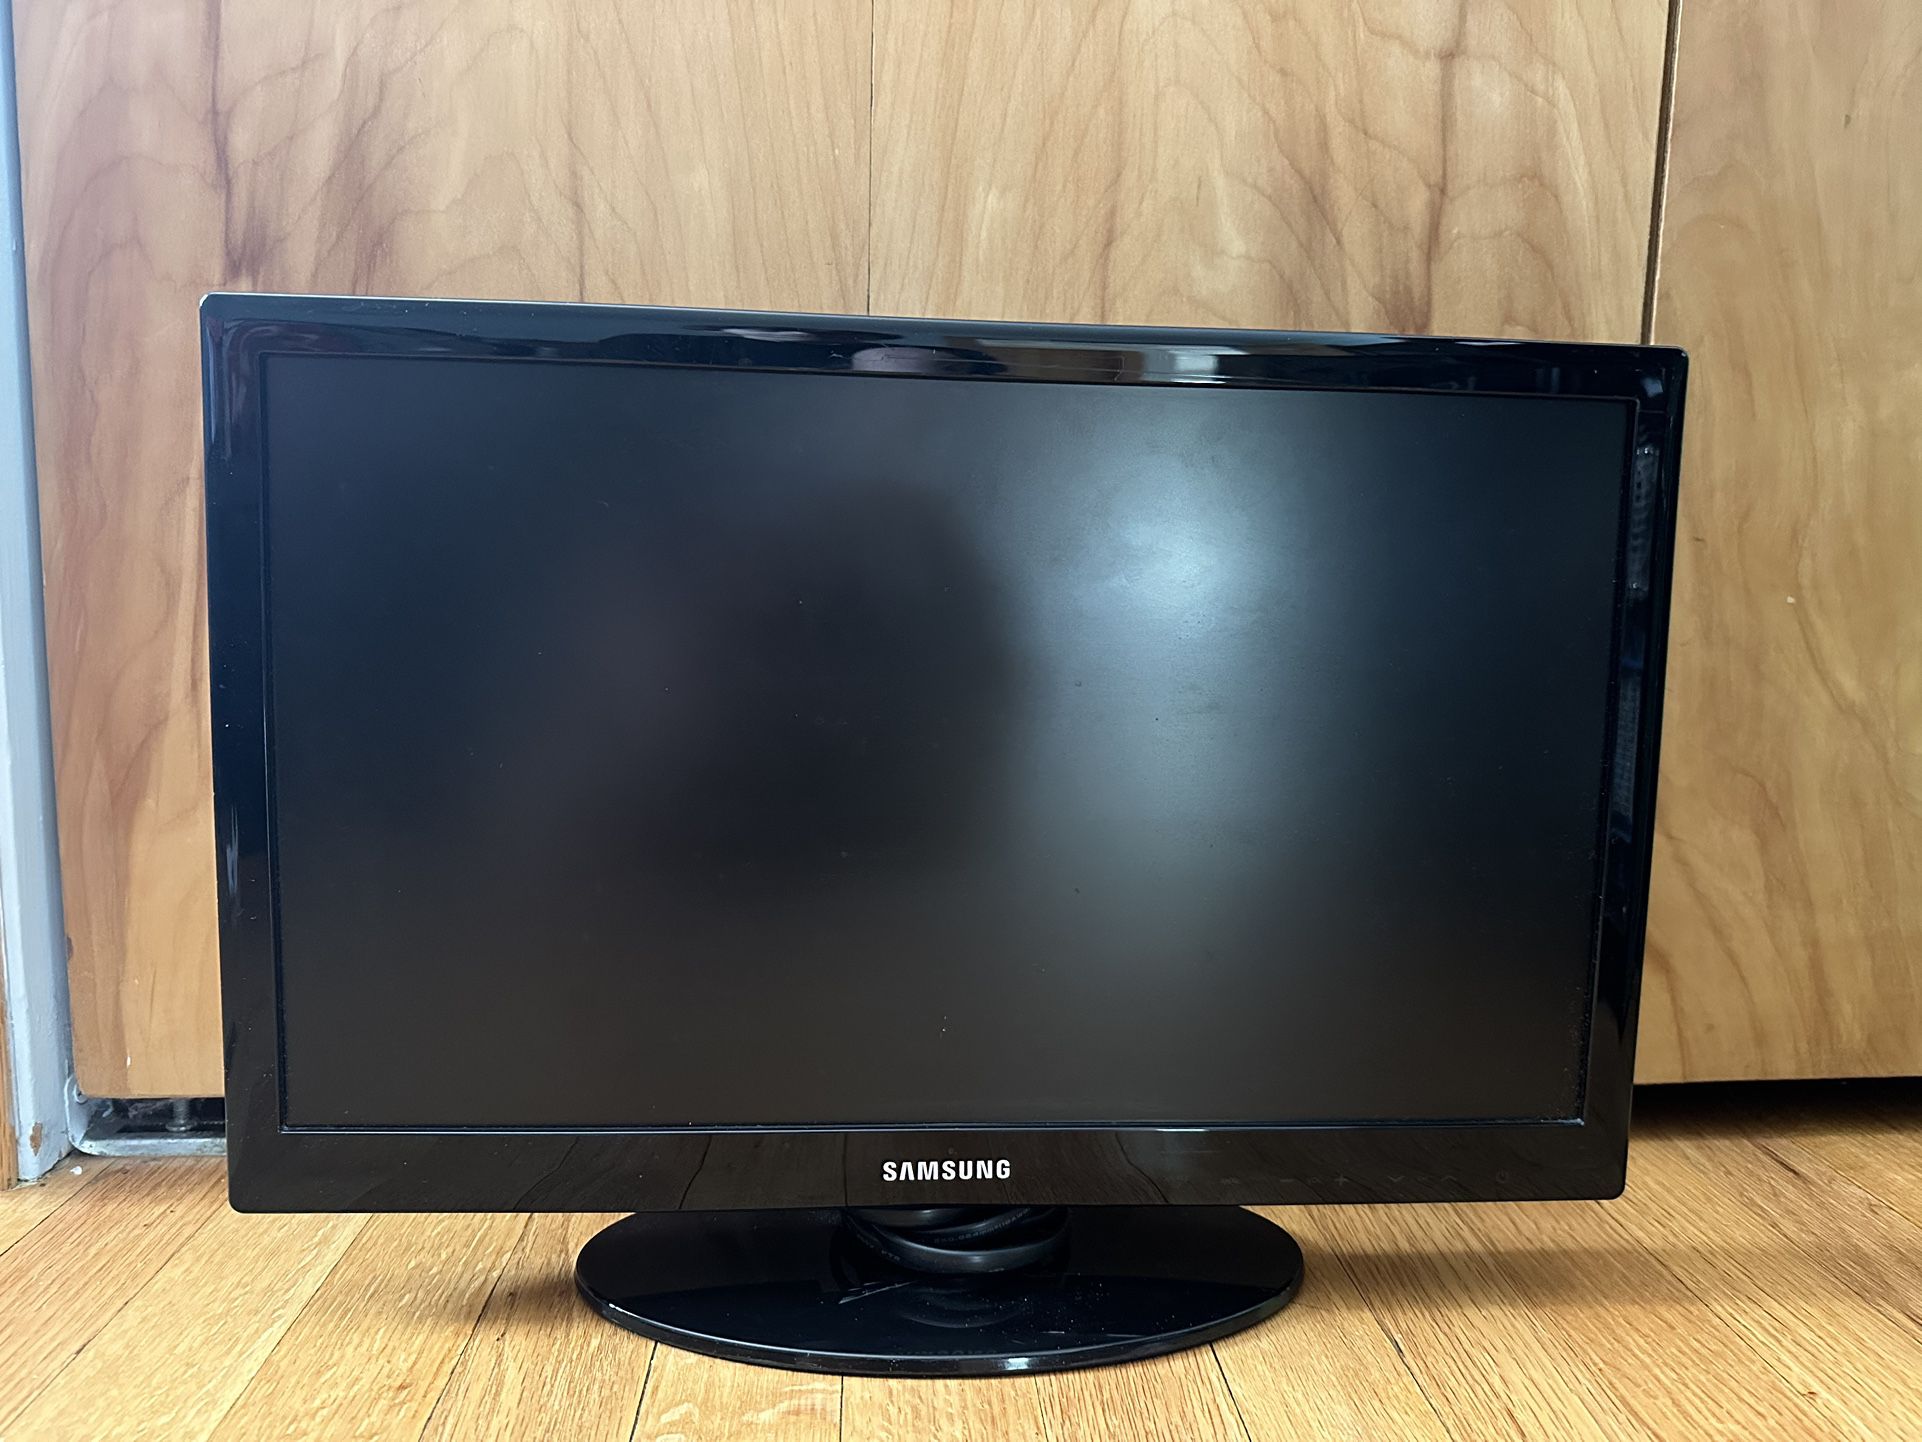 SAMSUNG 19 inch monitor 